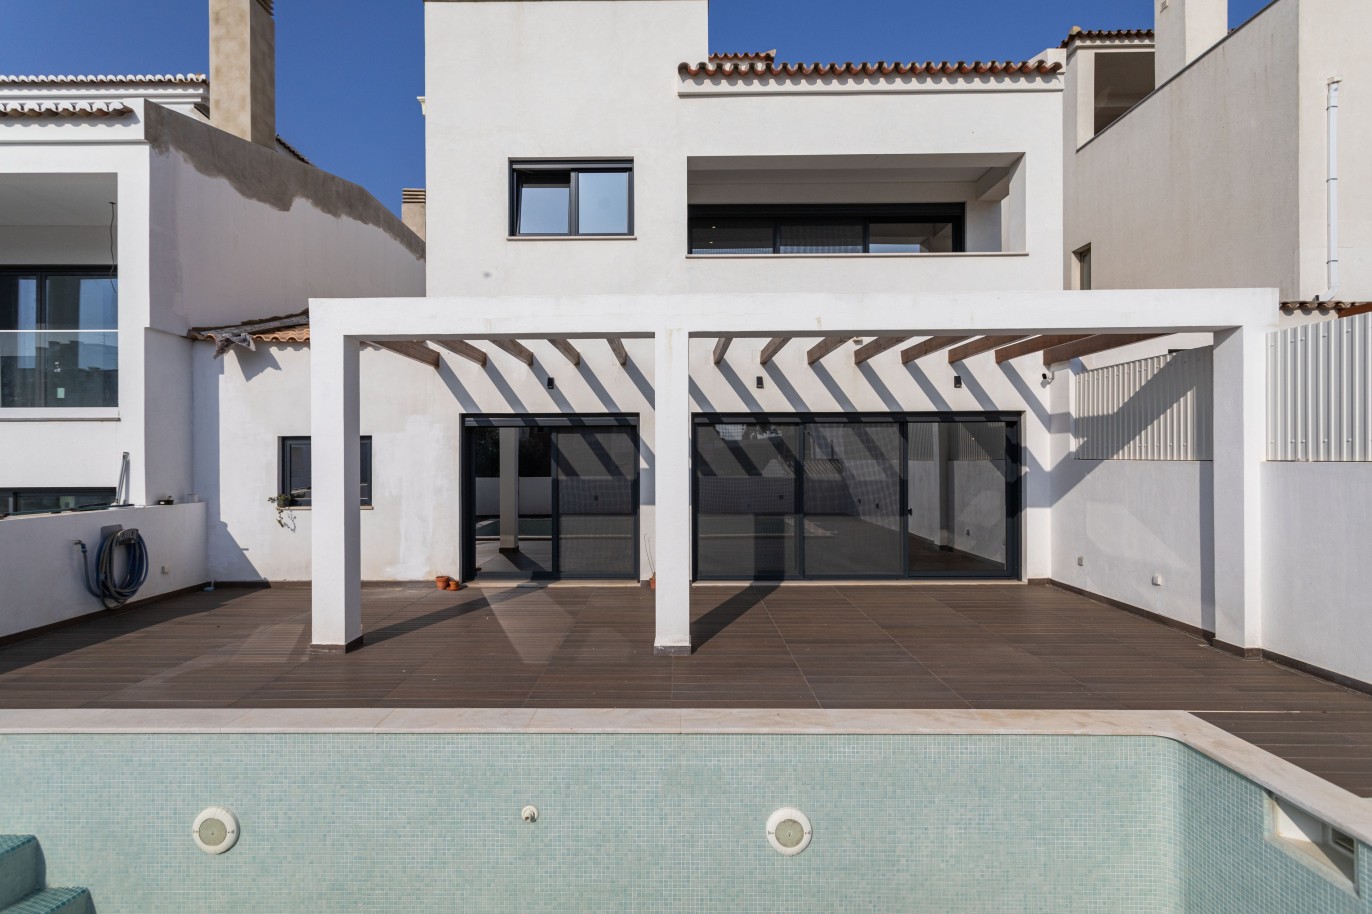 4 Bedroom Villa with pool, for sale in Gambelas, Algarve_231141